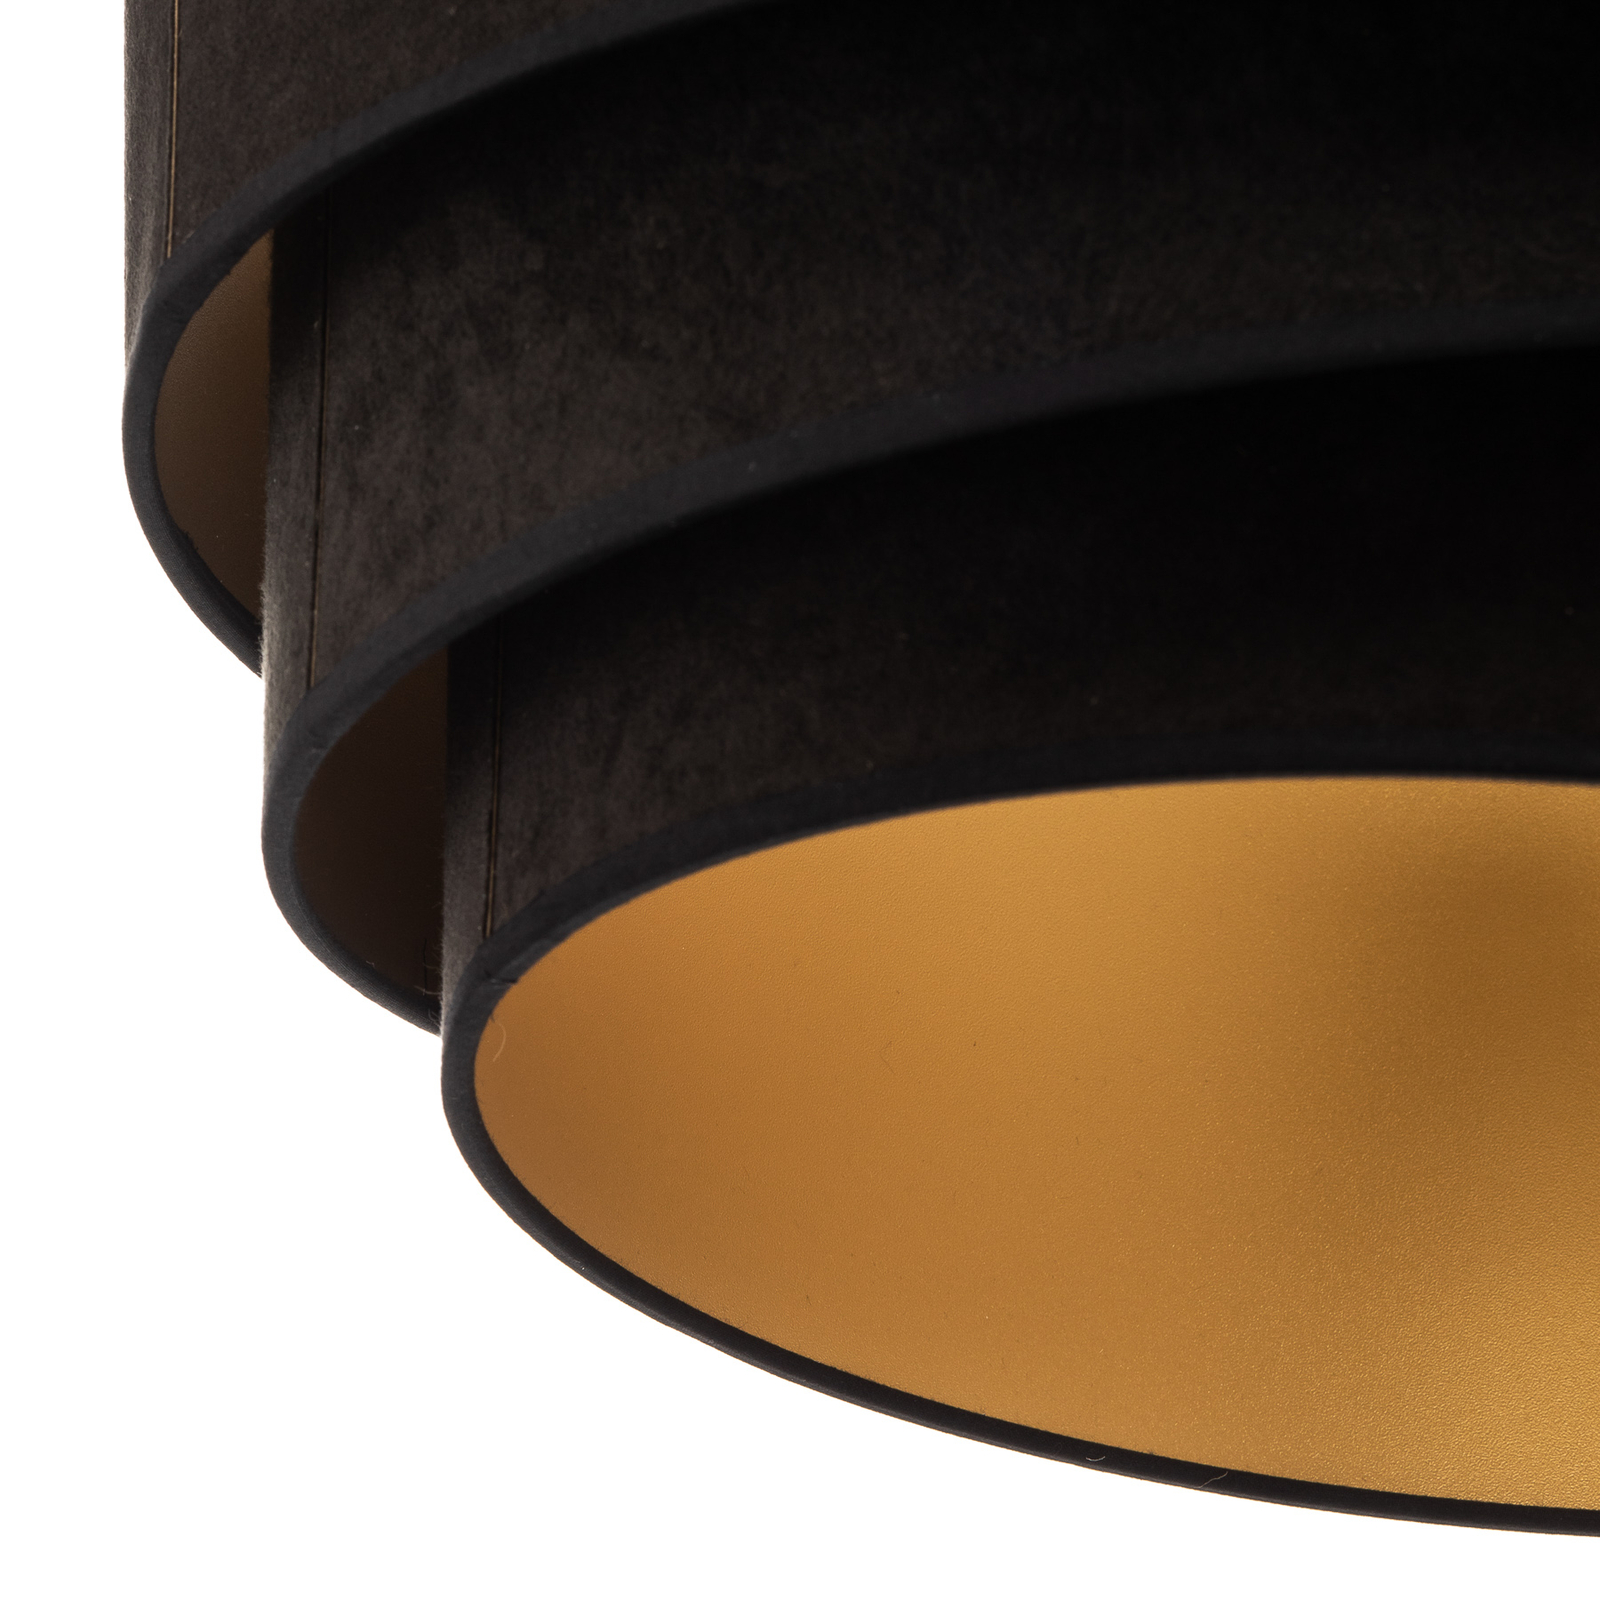 Devon ceiling light, black/gold Ø 45 cm